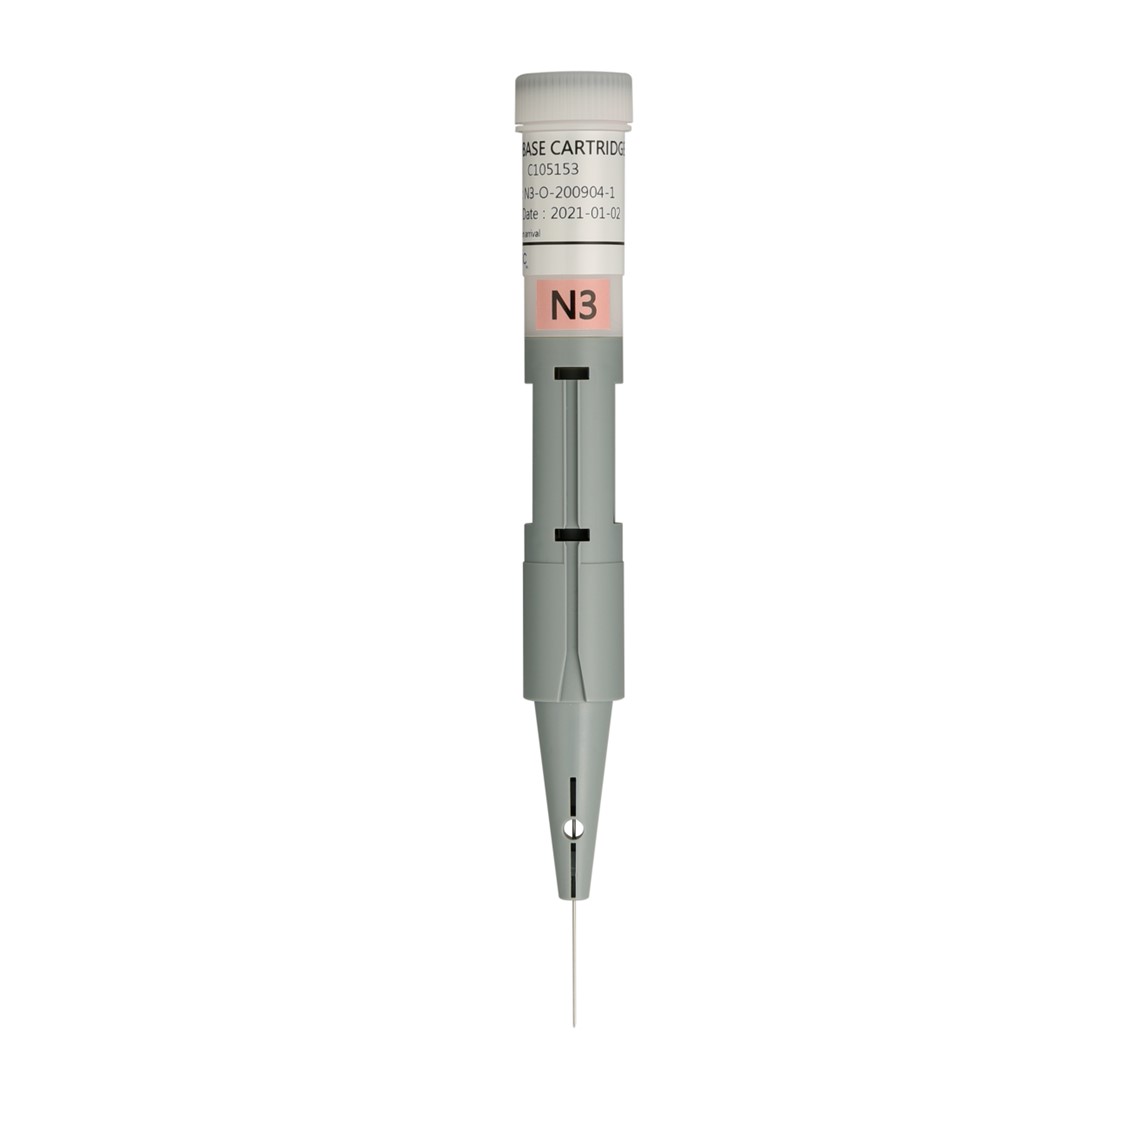 N3 Cartridge (High Sensitivity Kilobase Cartridge)